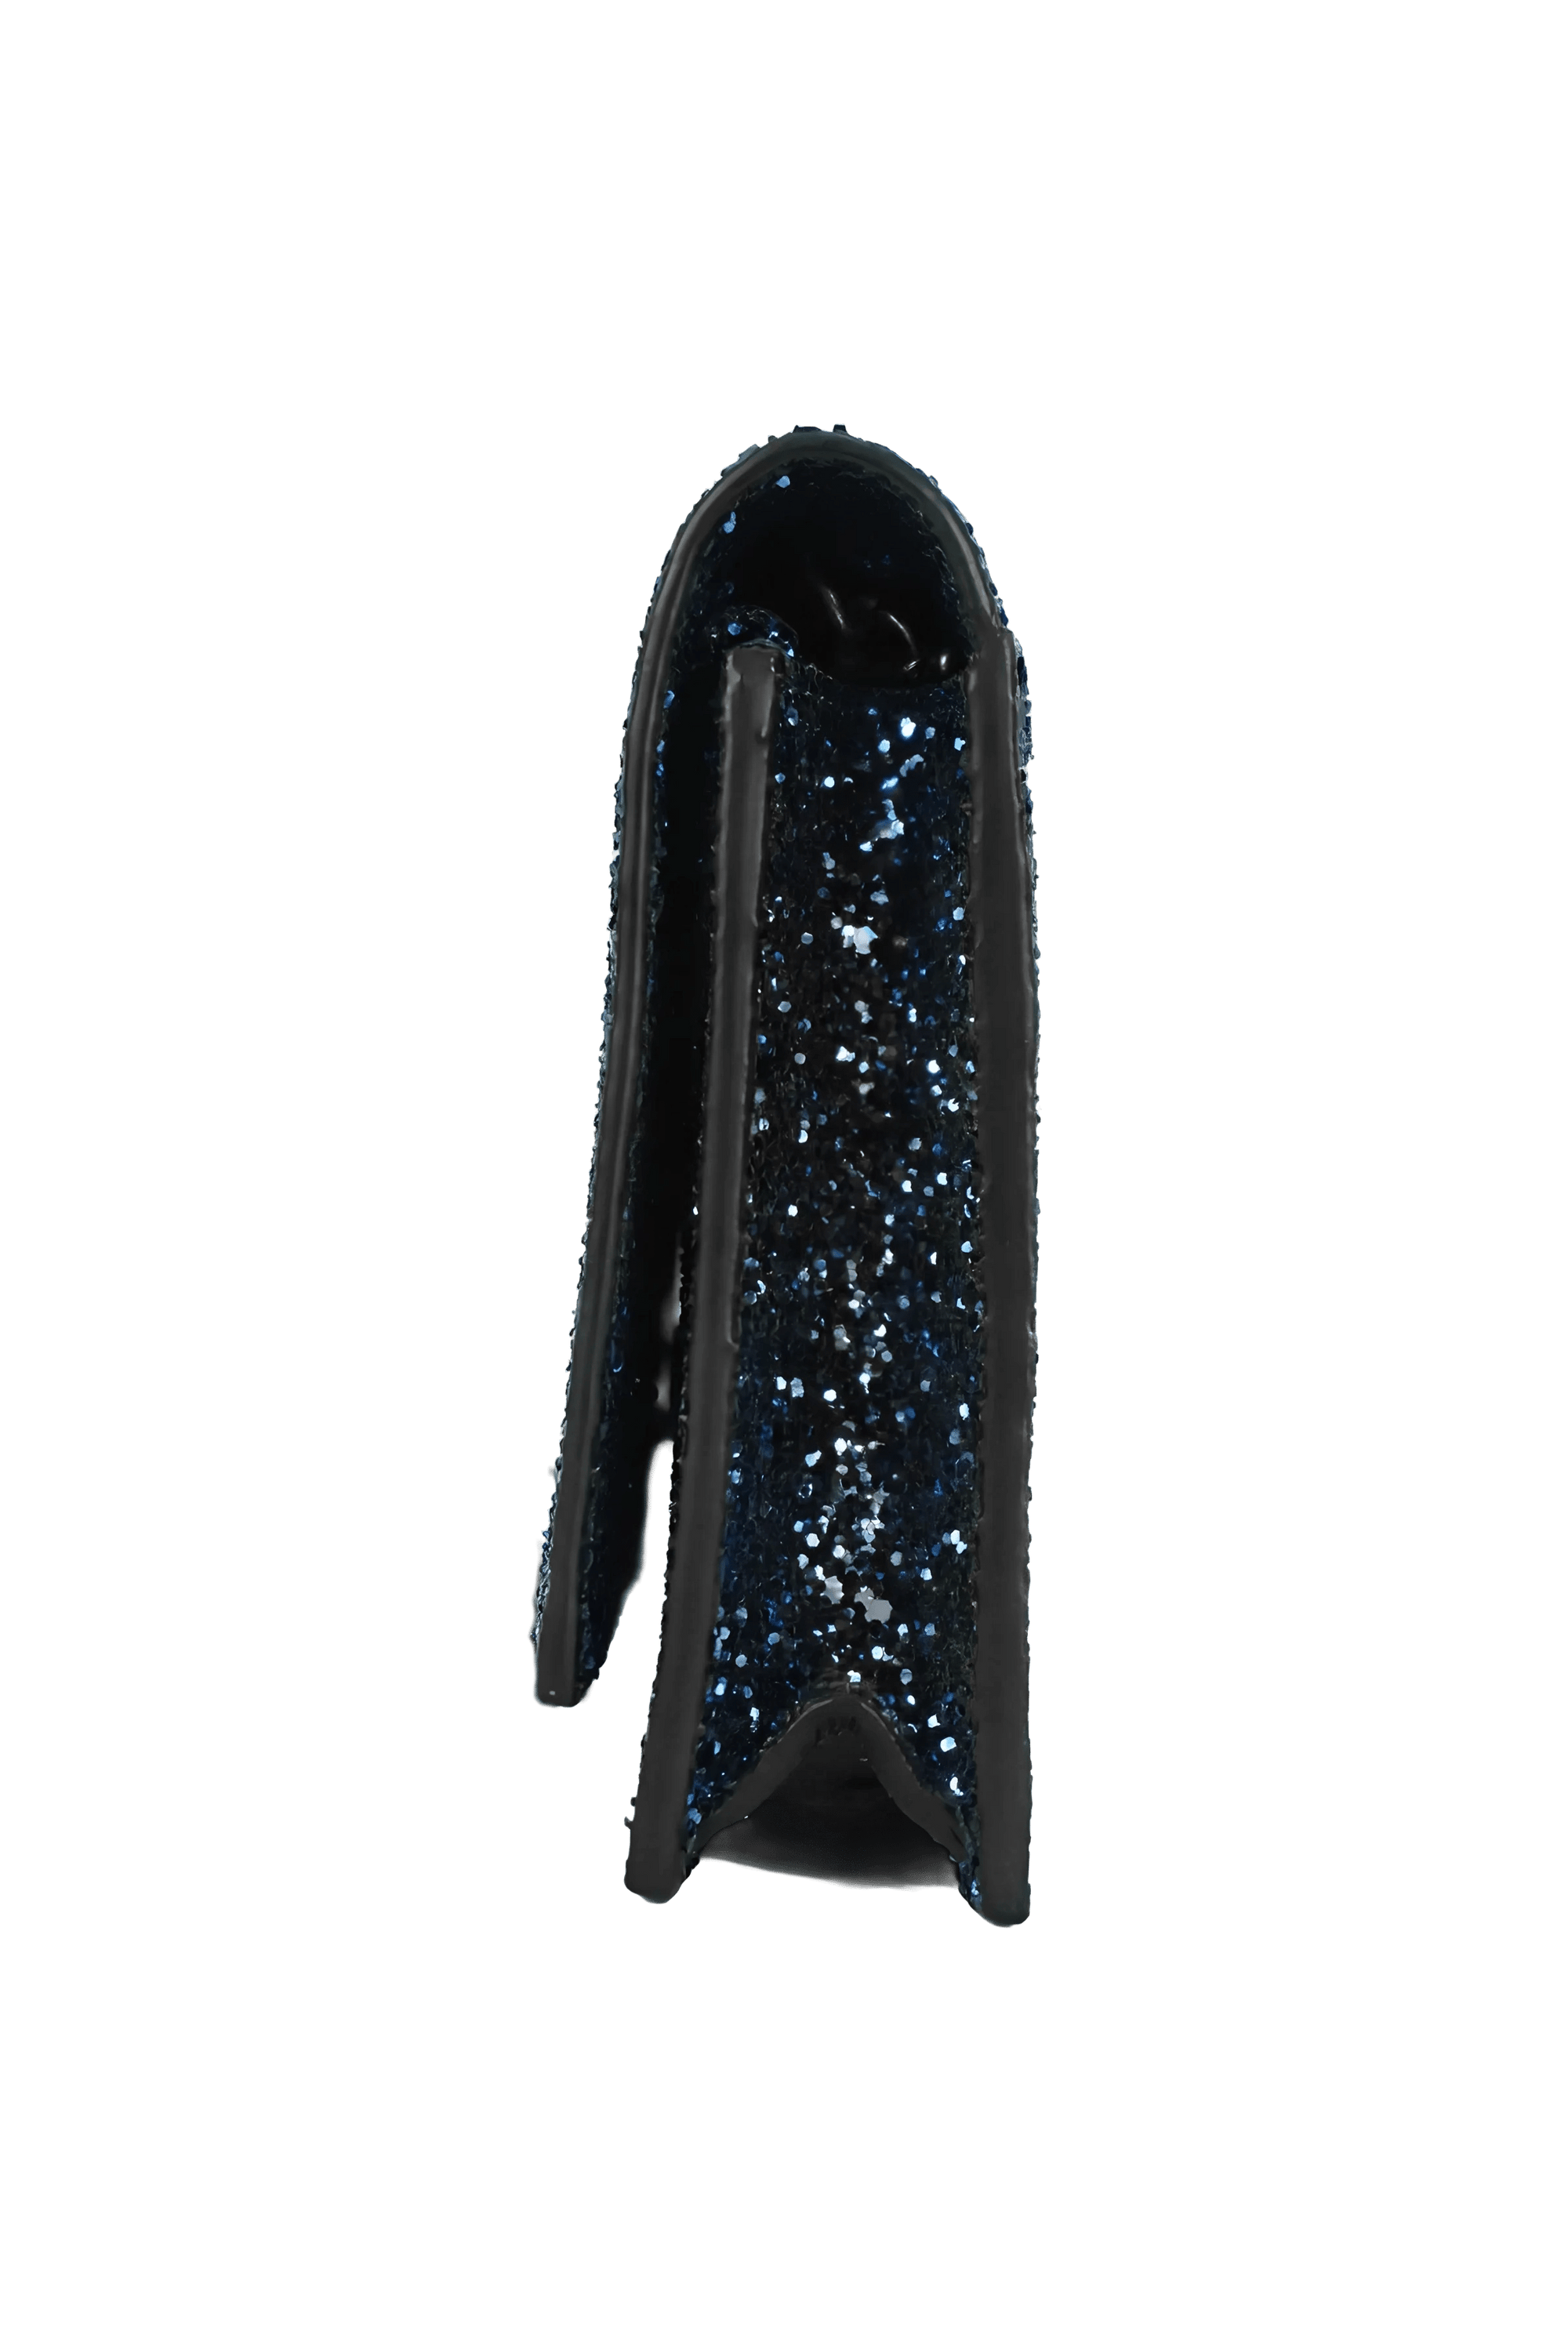 Saint Laurent Sapphire Blue Glitter Kate Wallet on a Chain Purse 2018